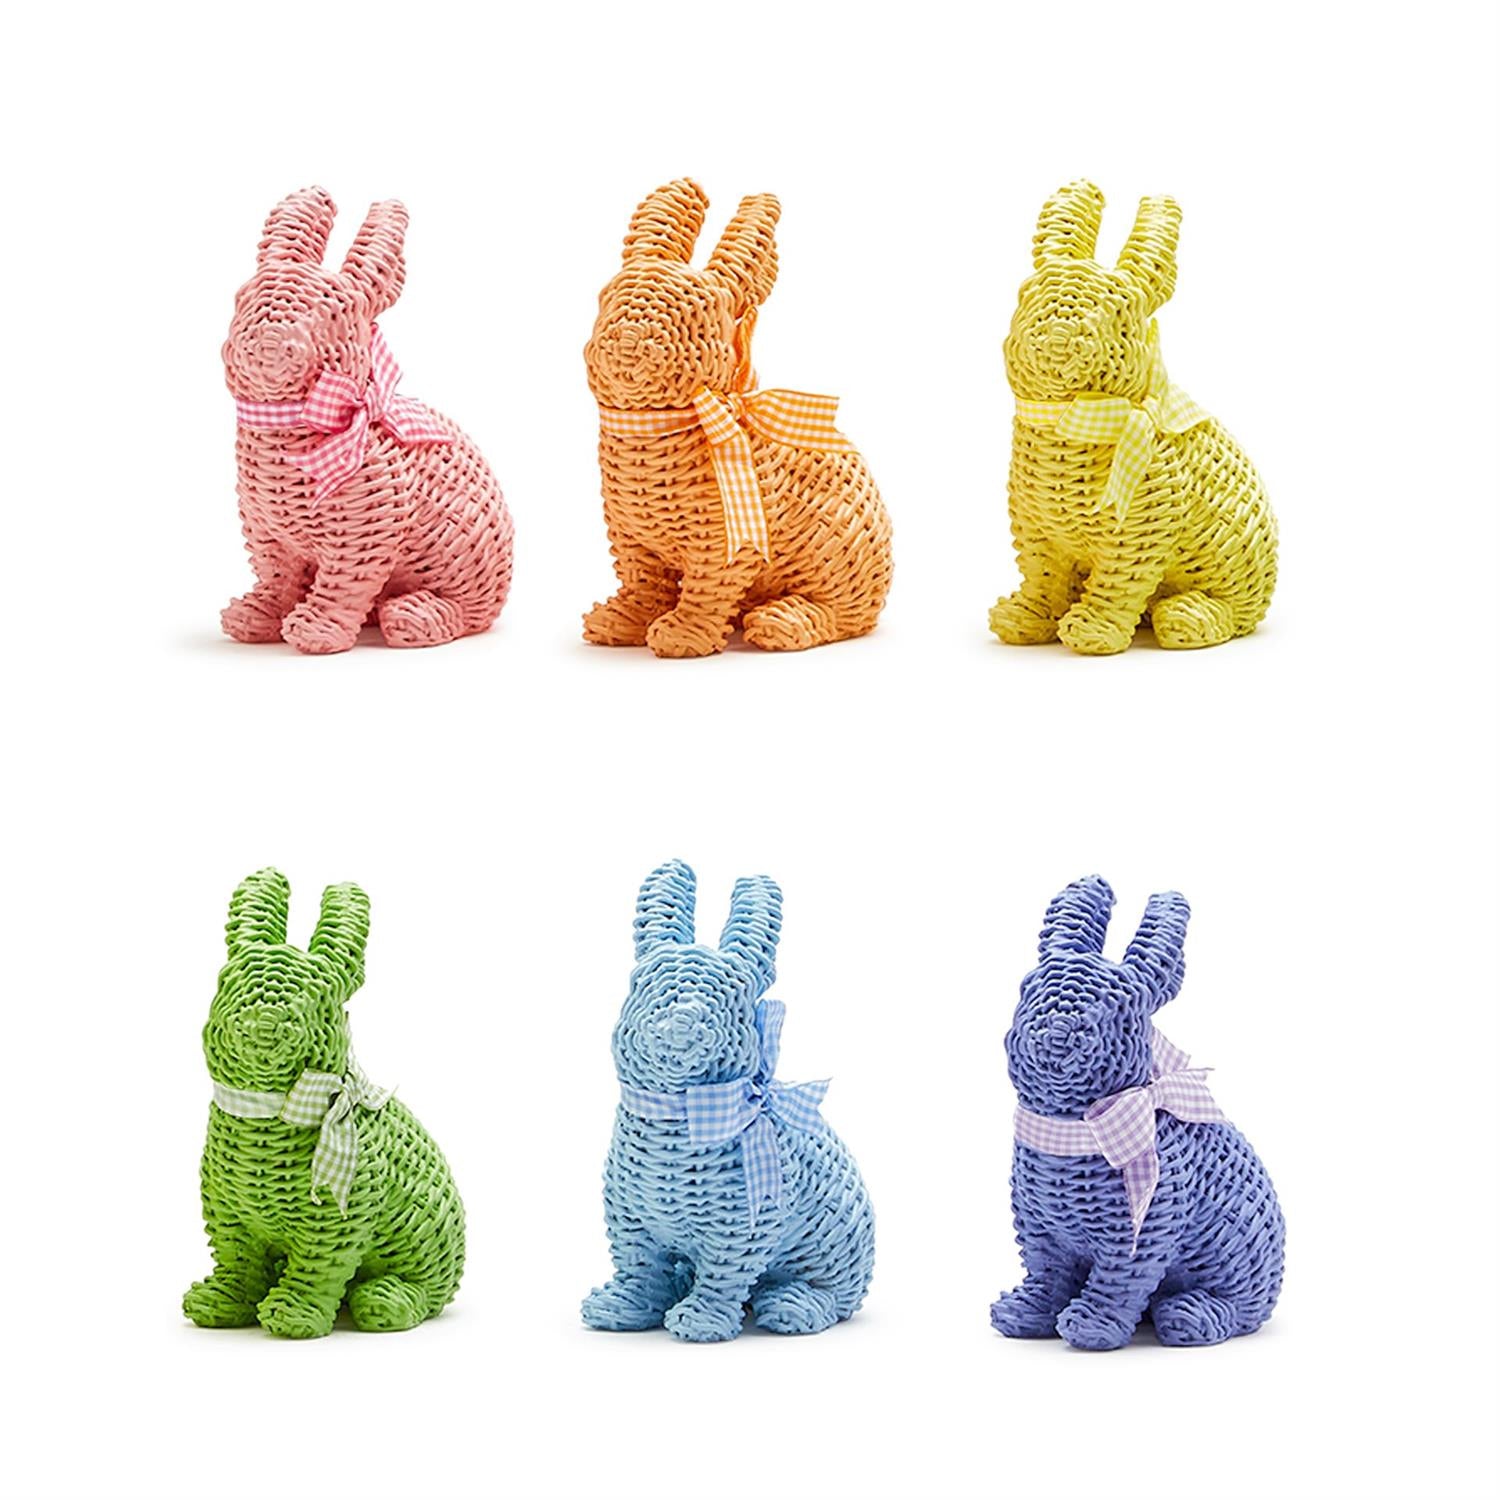 Colorful Basketweave Bunny - The Preppy Bunny